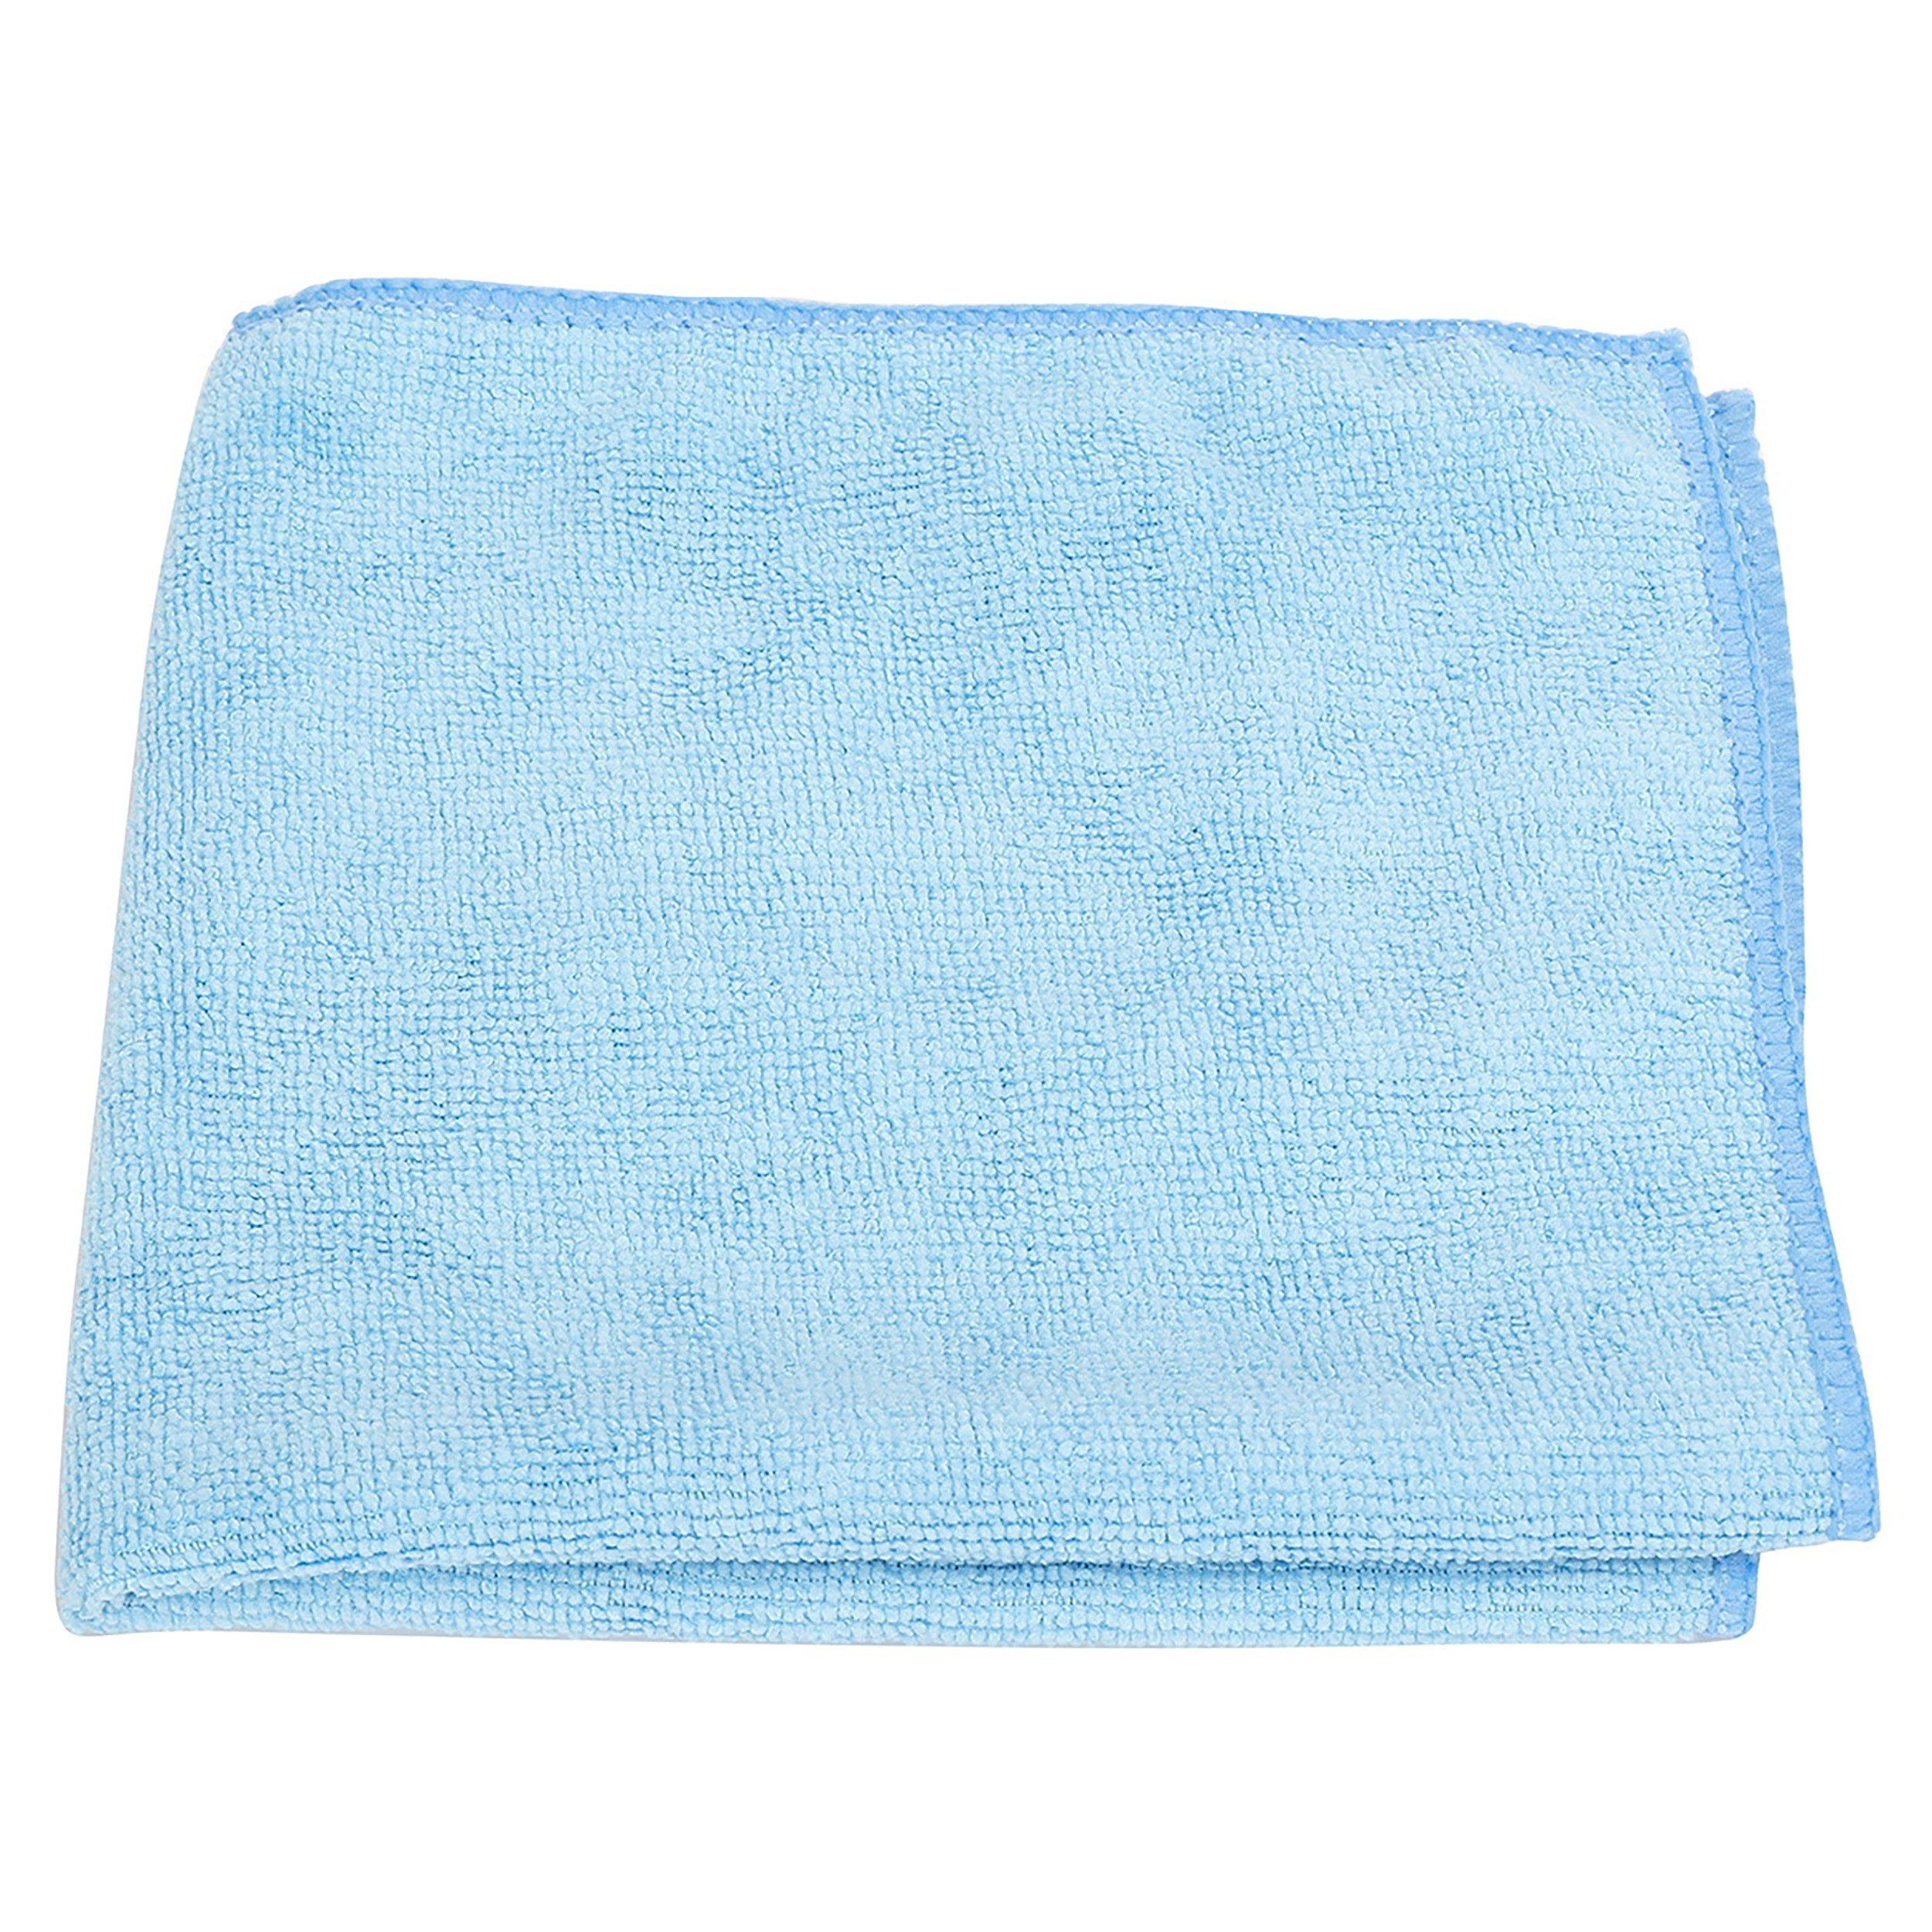 Work Pro Microfiber Towels - 24pk.